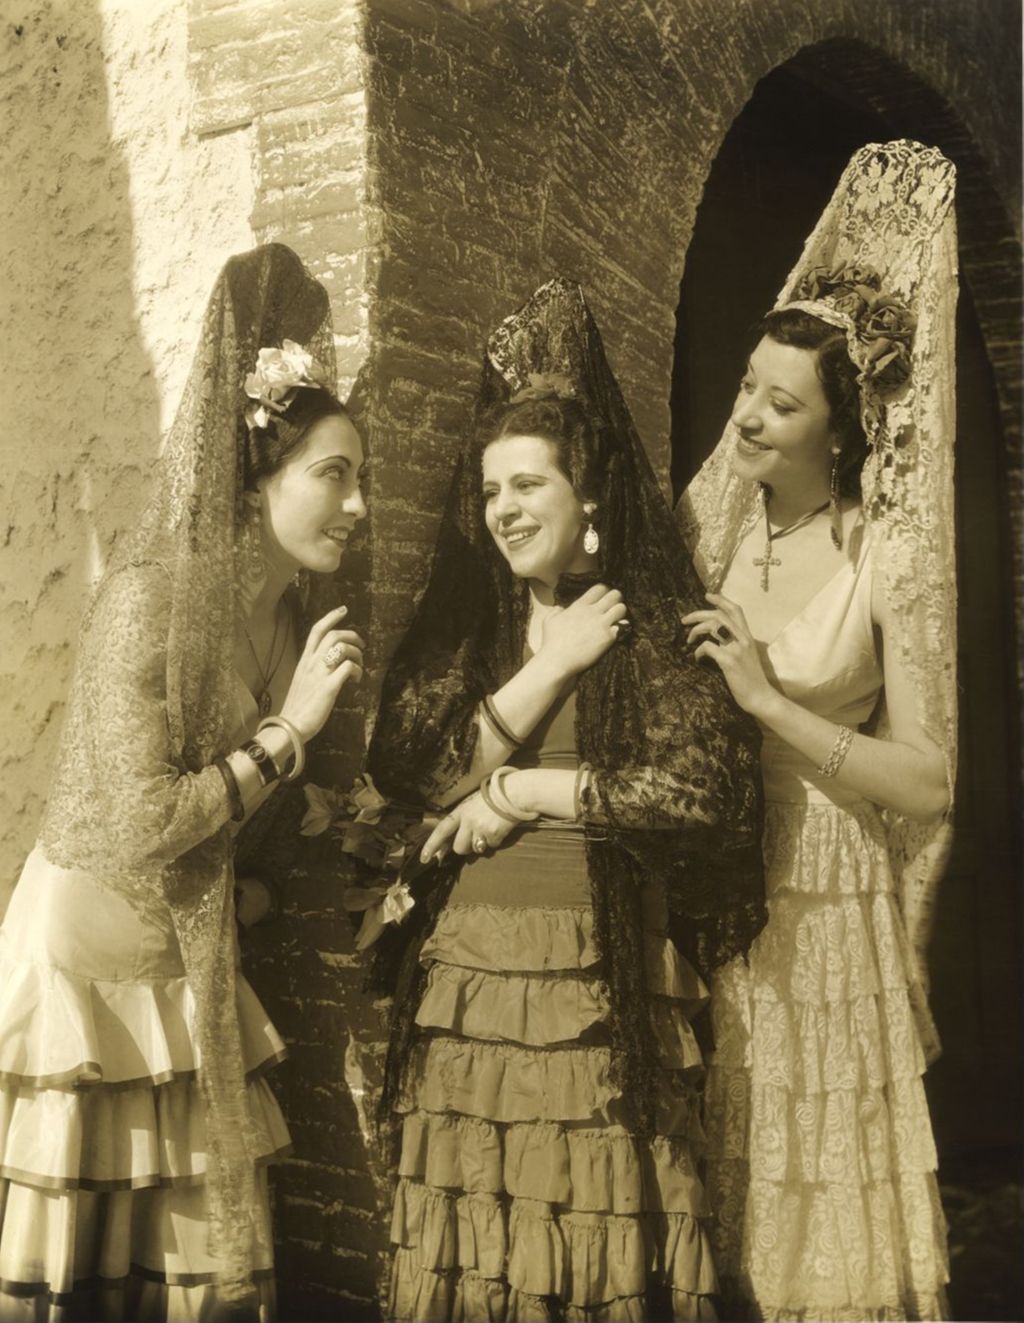 Miniature of Three women in the Spanish Village at the World's Fair